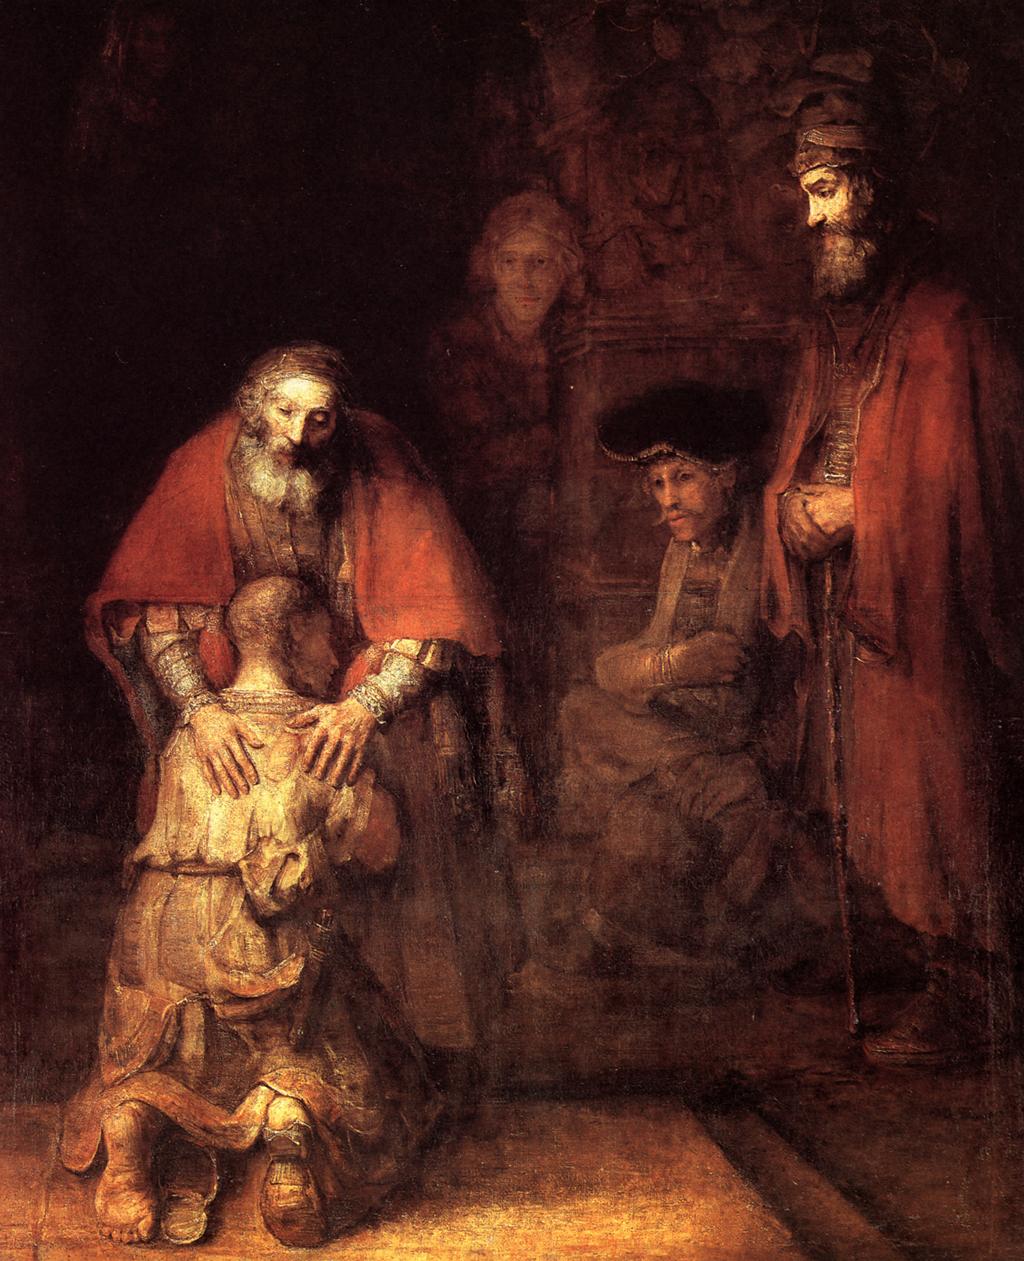 Rembrandt van Rijn. The return of the prodigal son. 1669.